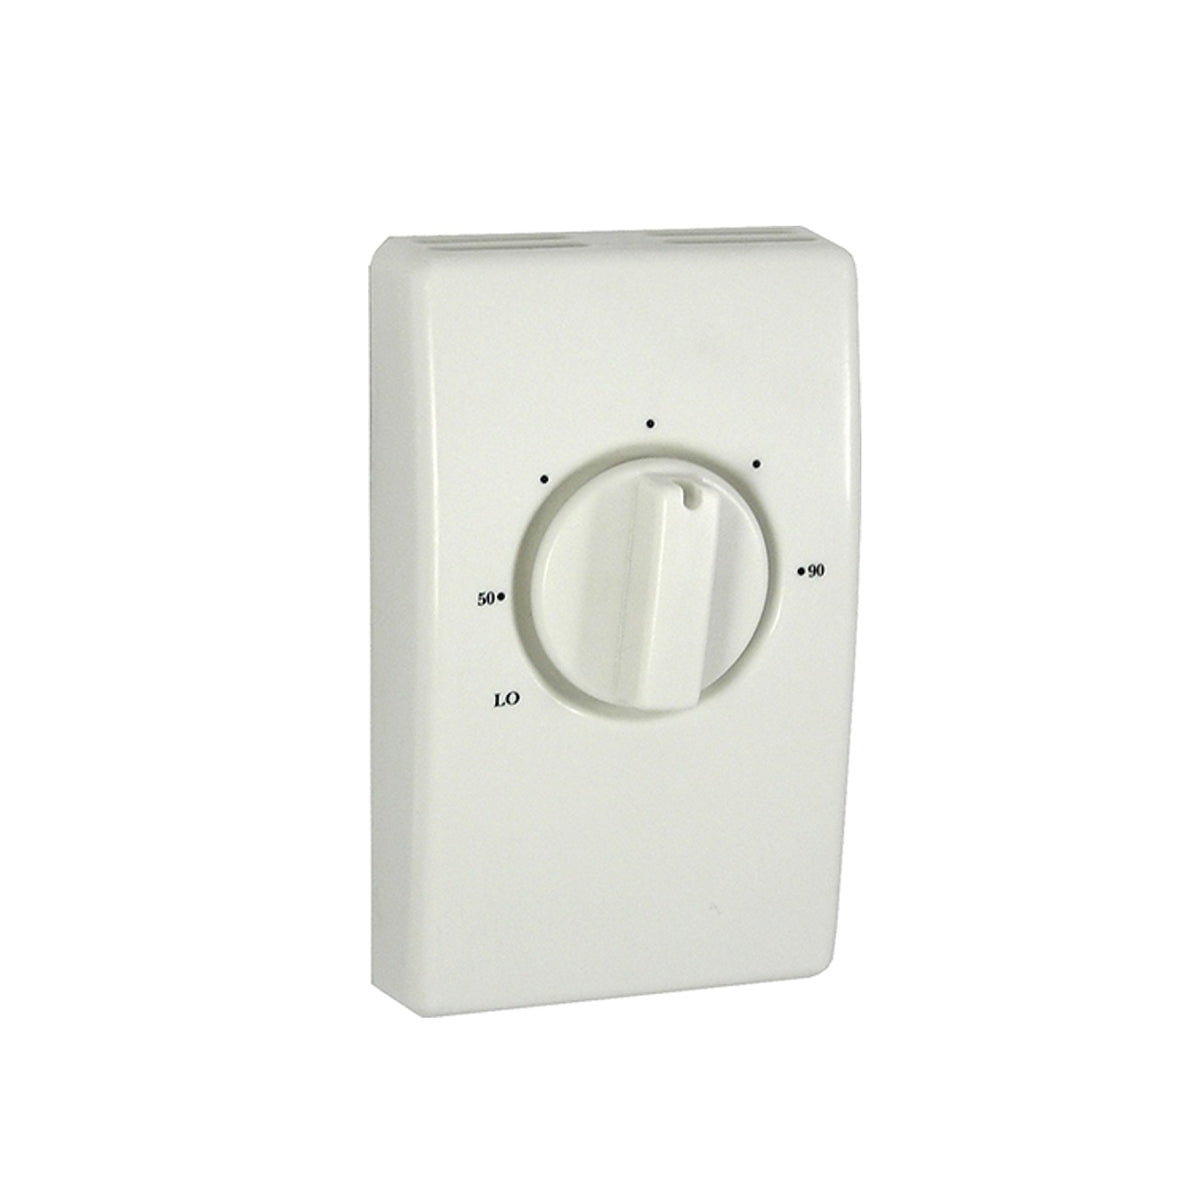 TPI D2022/0050179 Double Pole Thermostat, White